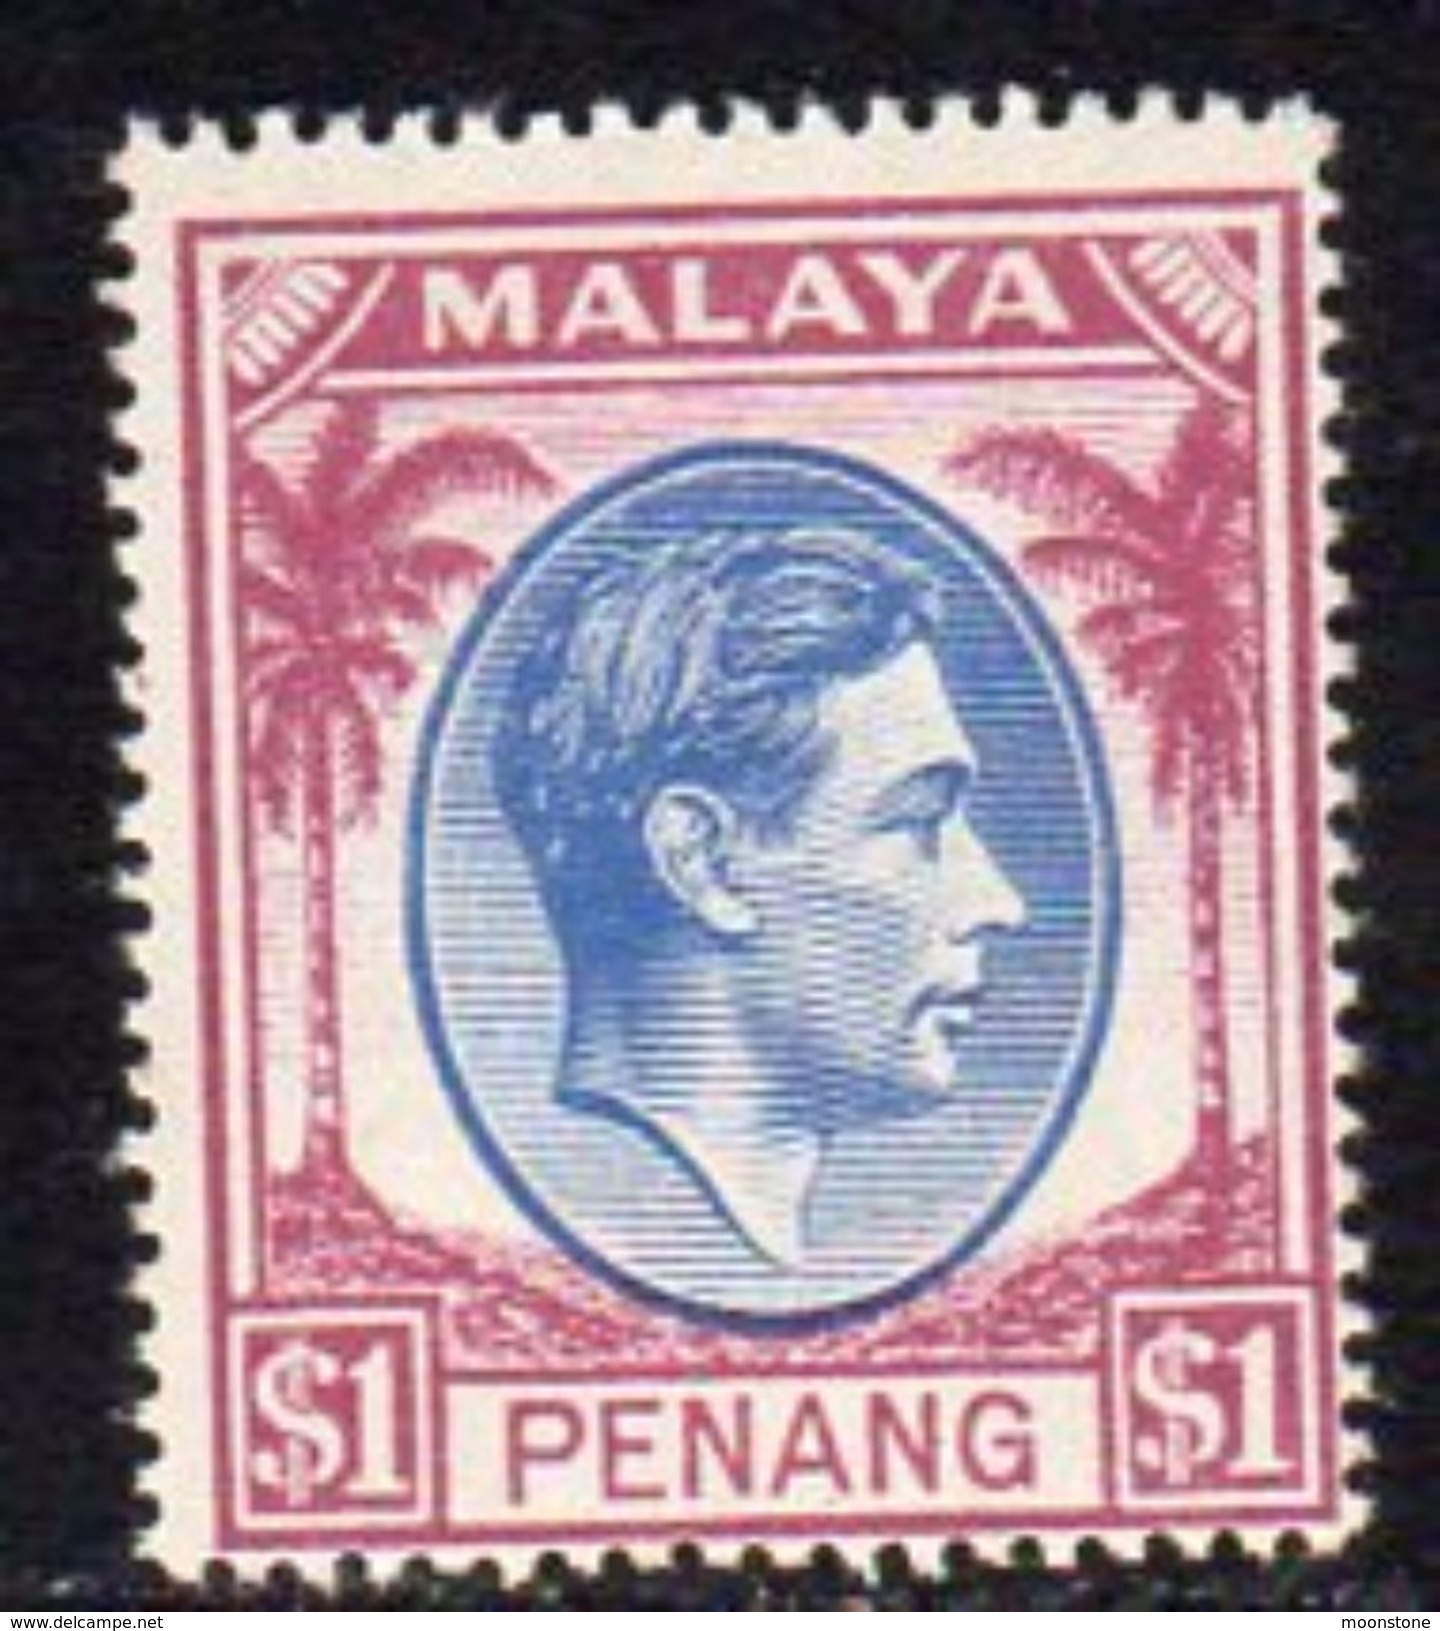 Malaya Penang 1949-52 GVI $1 Blue & Purple Definitive, Hinged Mint, SG 20 - Penang